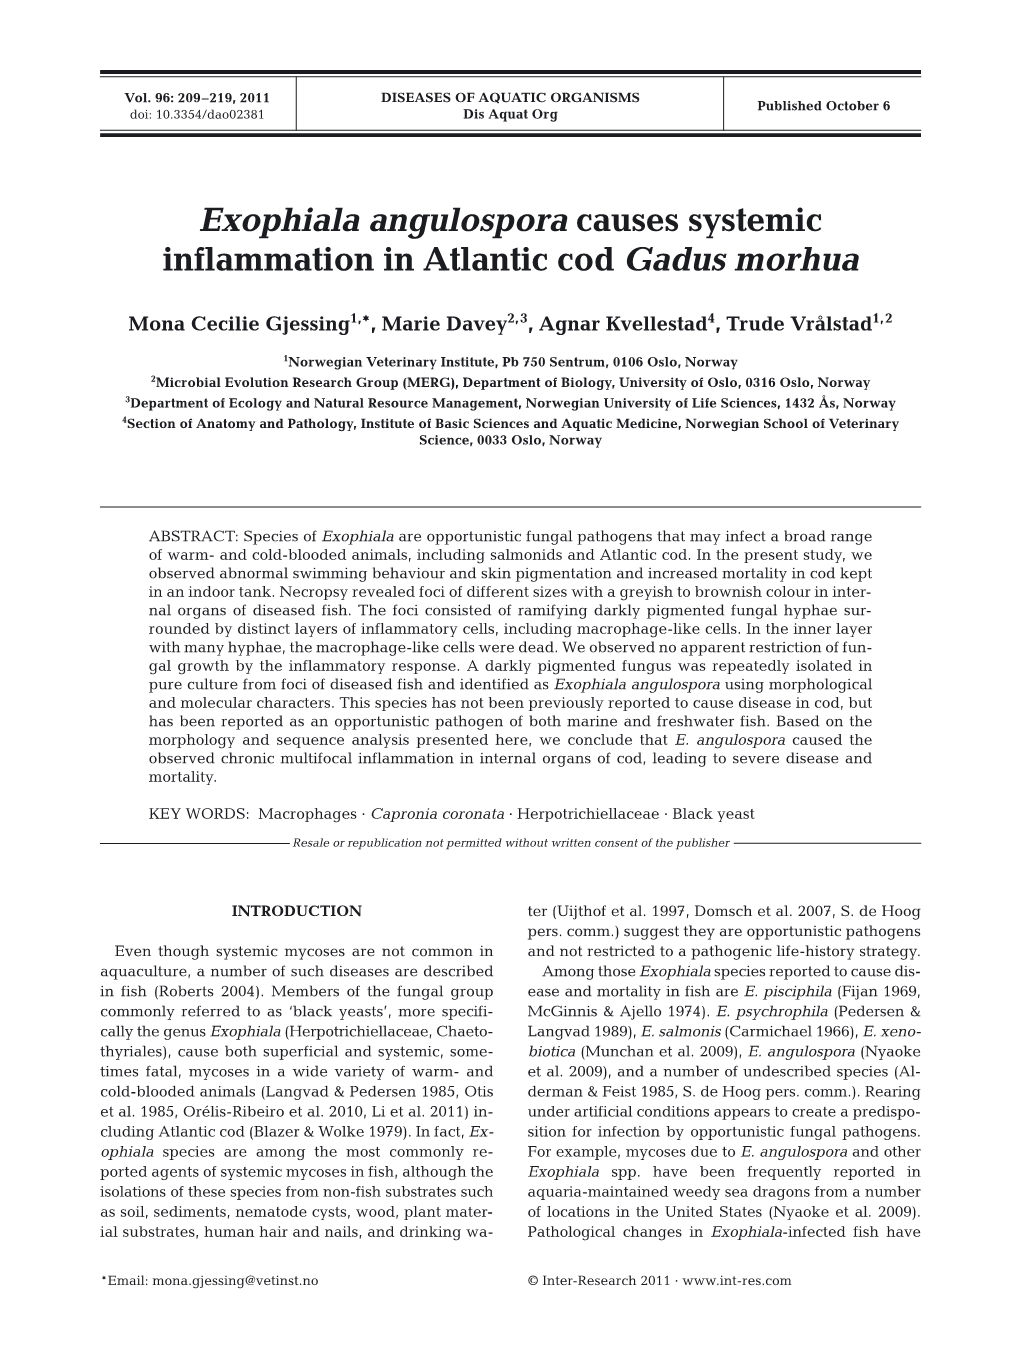 Exophiala Angulospora Causes Systemic Inflammation in Atlantic Cod Gadus Morhua